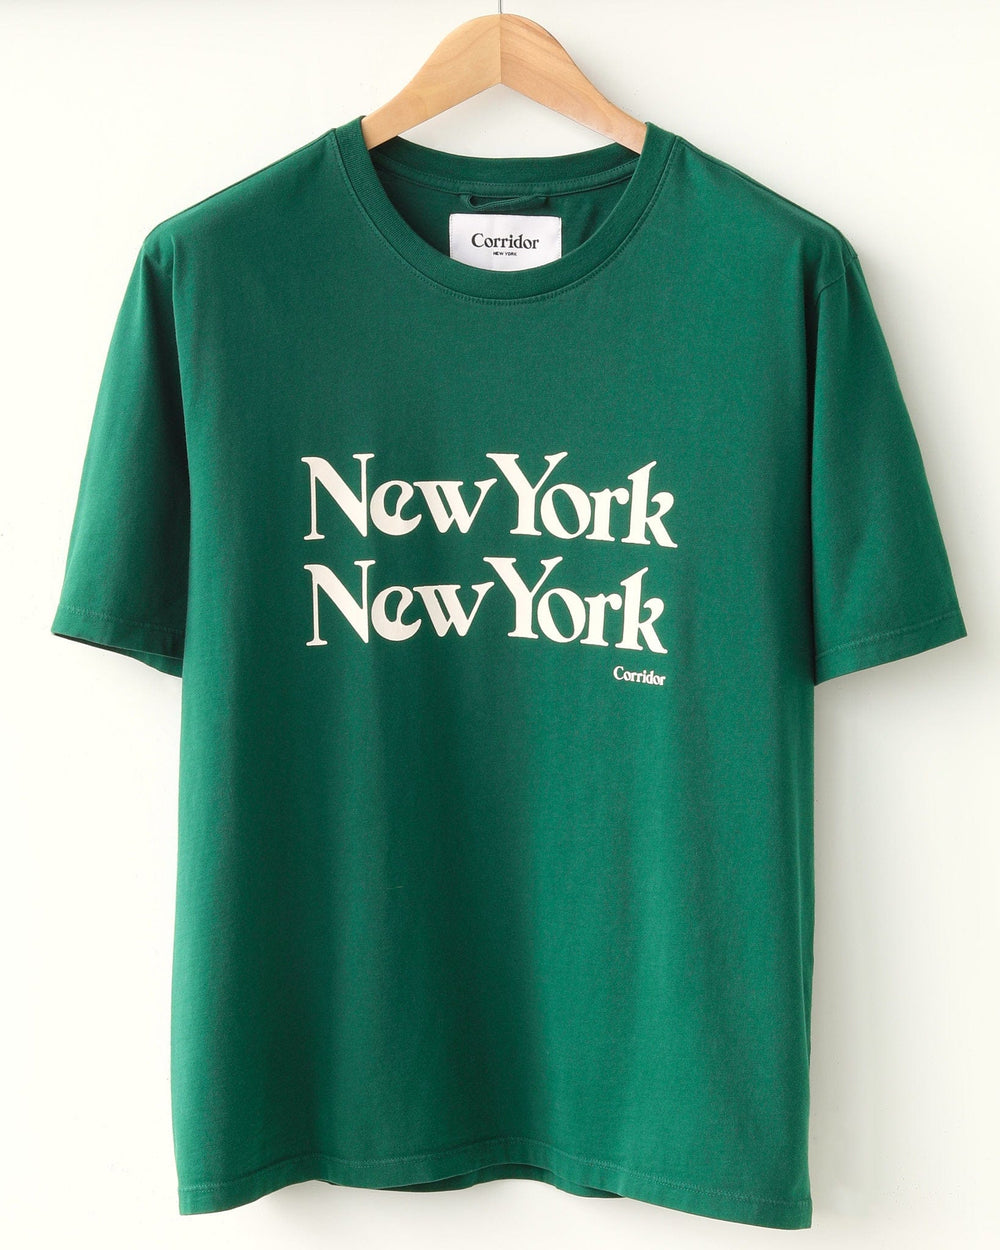 New York New York T-Shirt - Green-T-Shirt-Corridor-Corridor